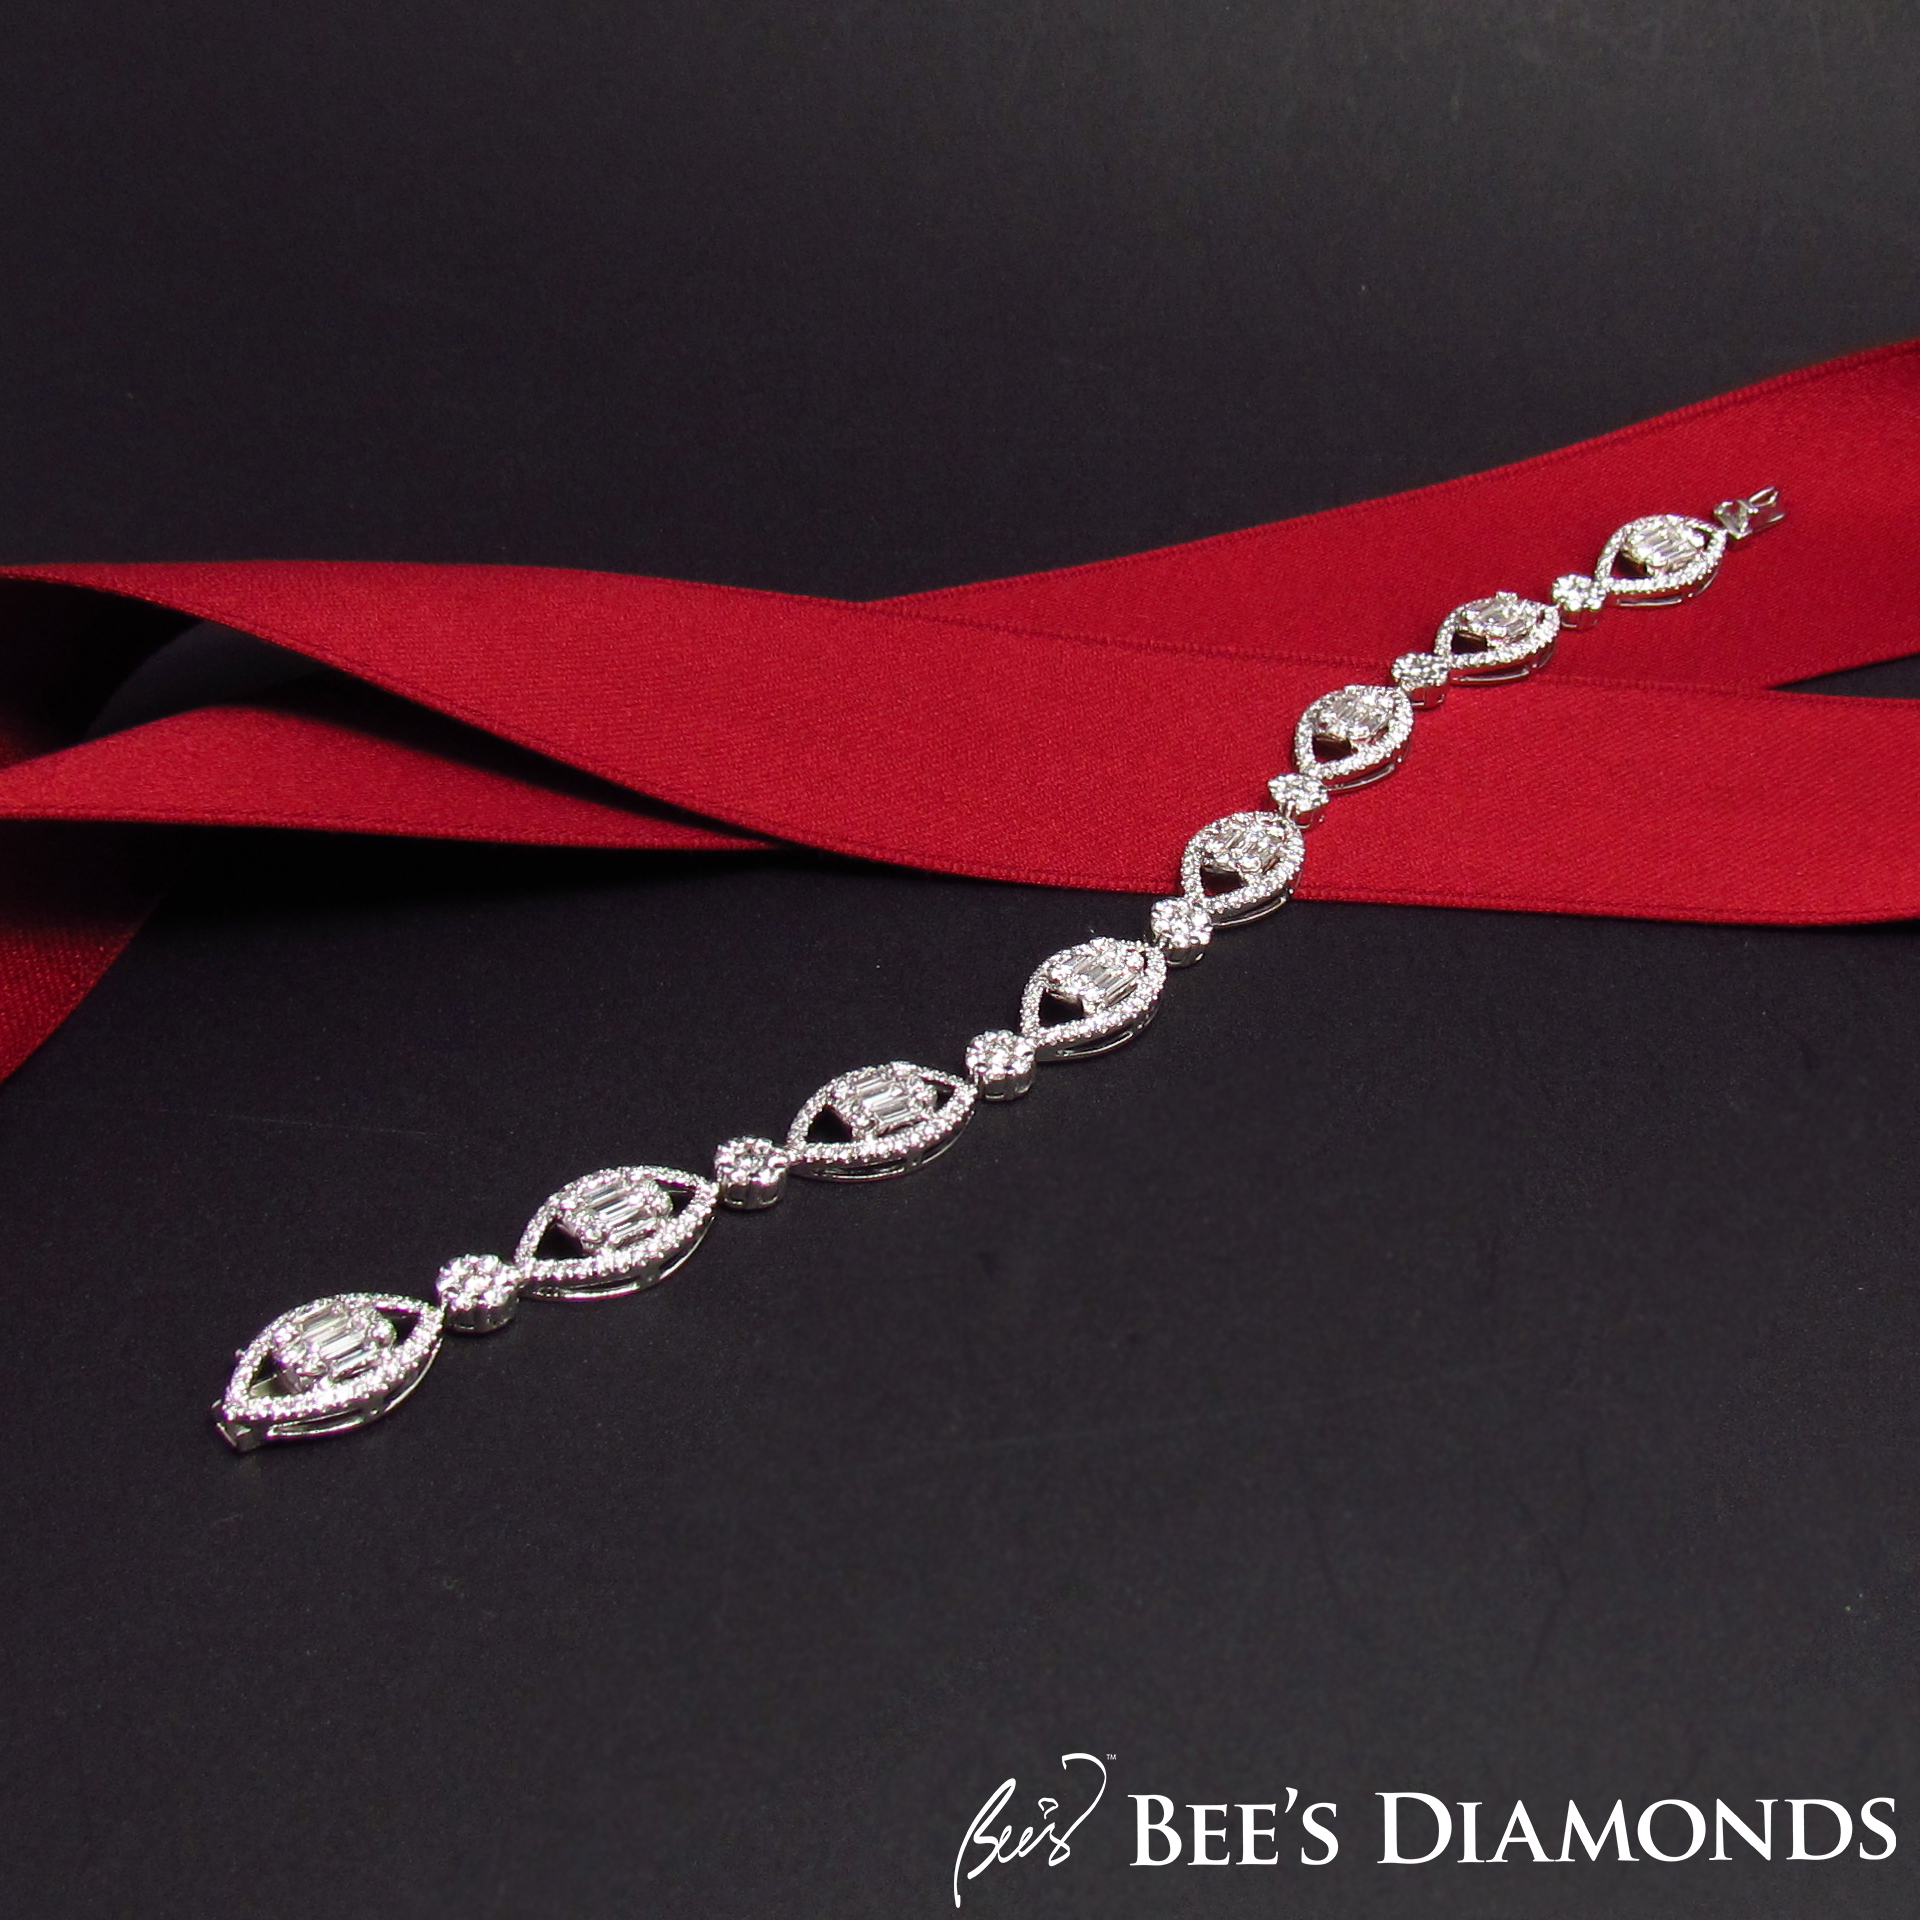 Fish-eye shaped, happiness diamond bracelet, bespoke jewellery